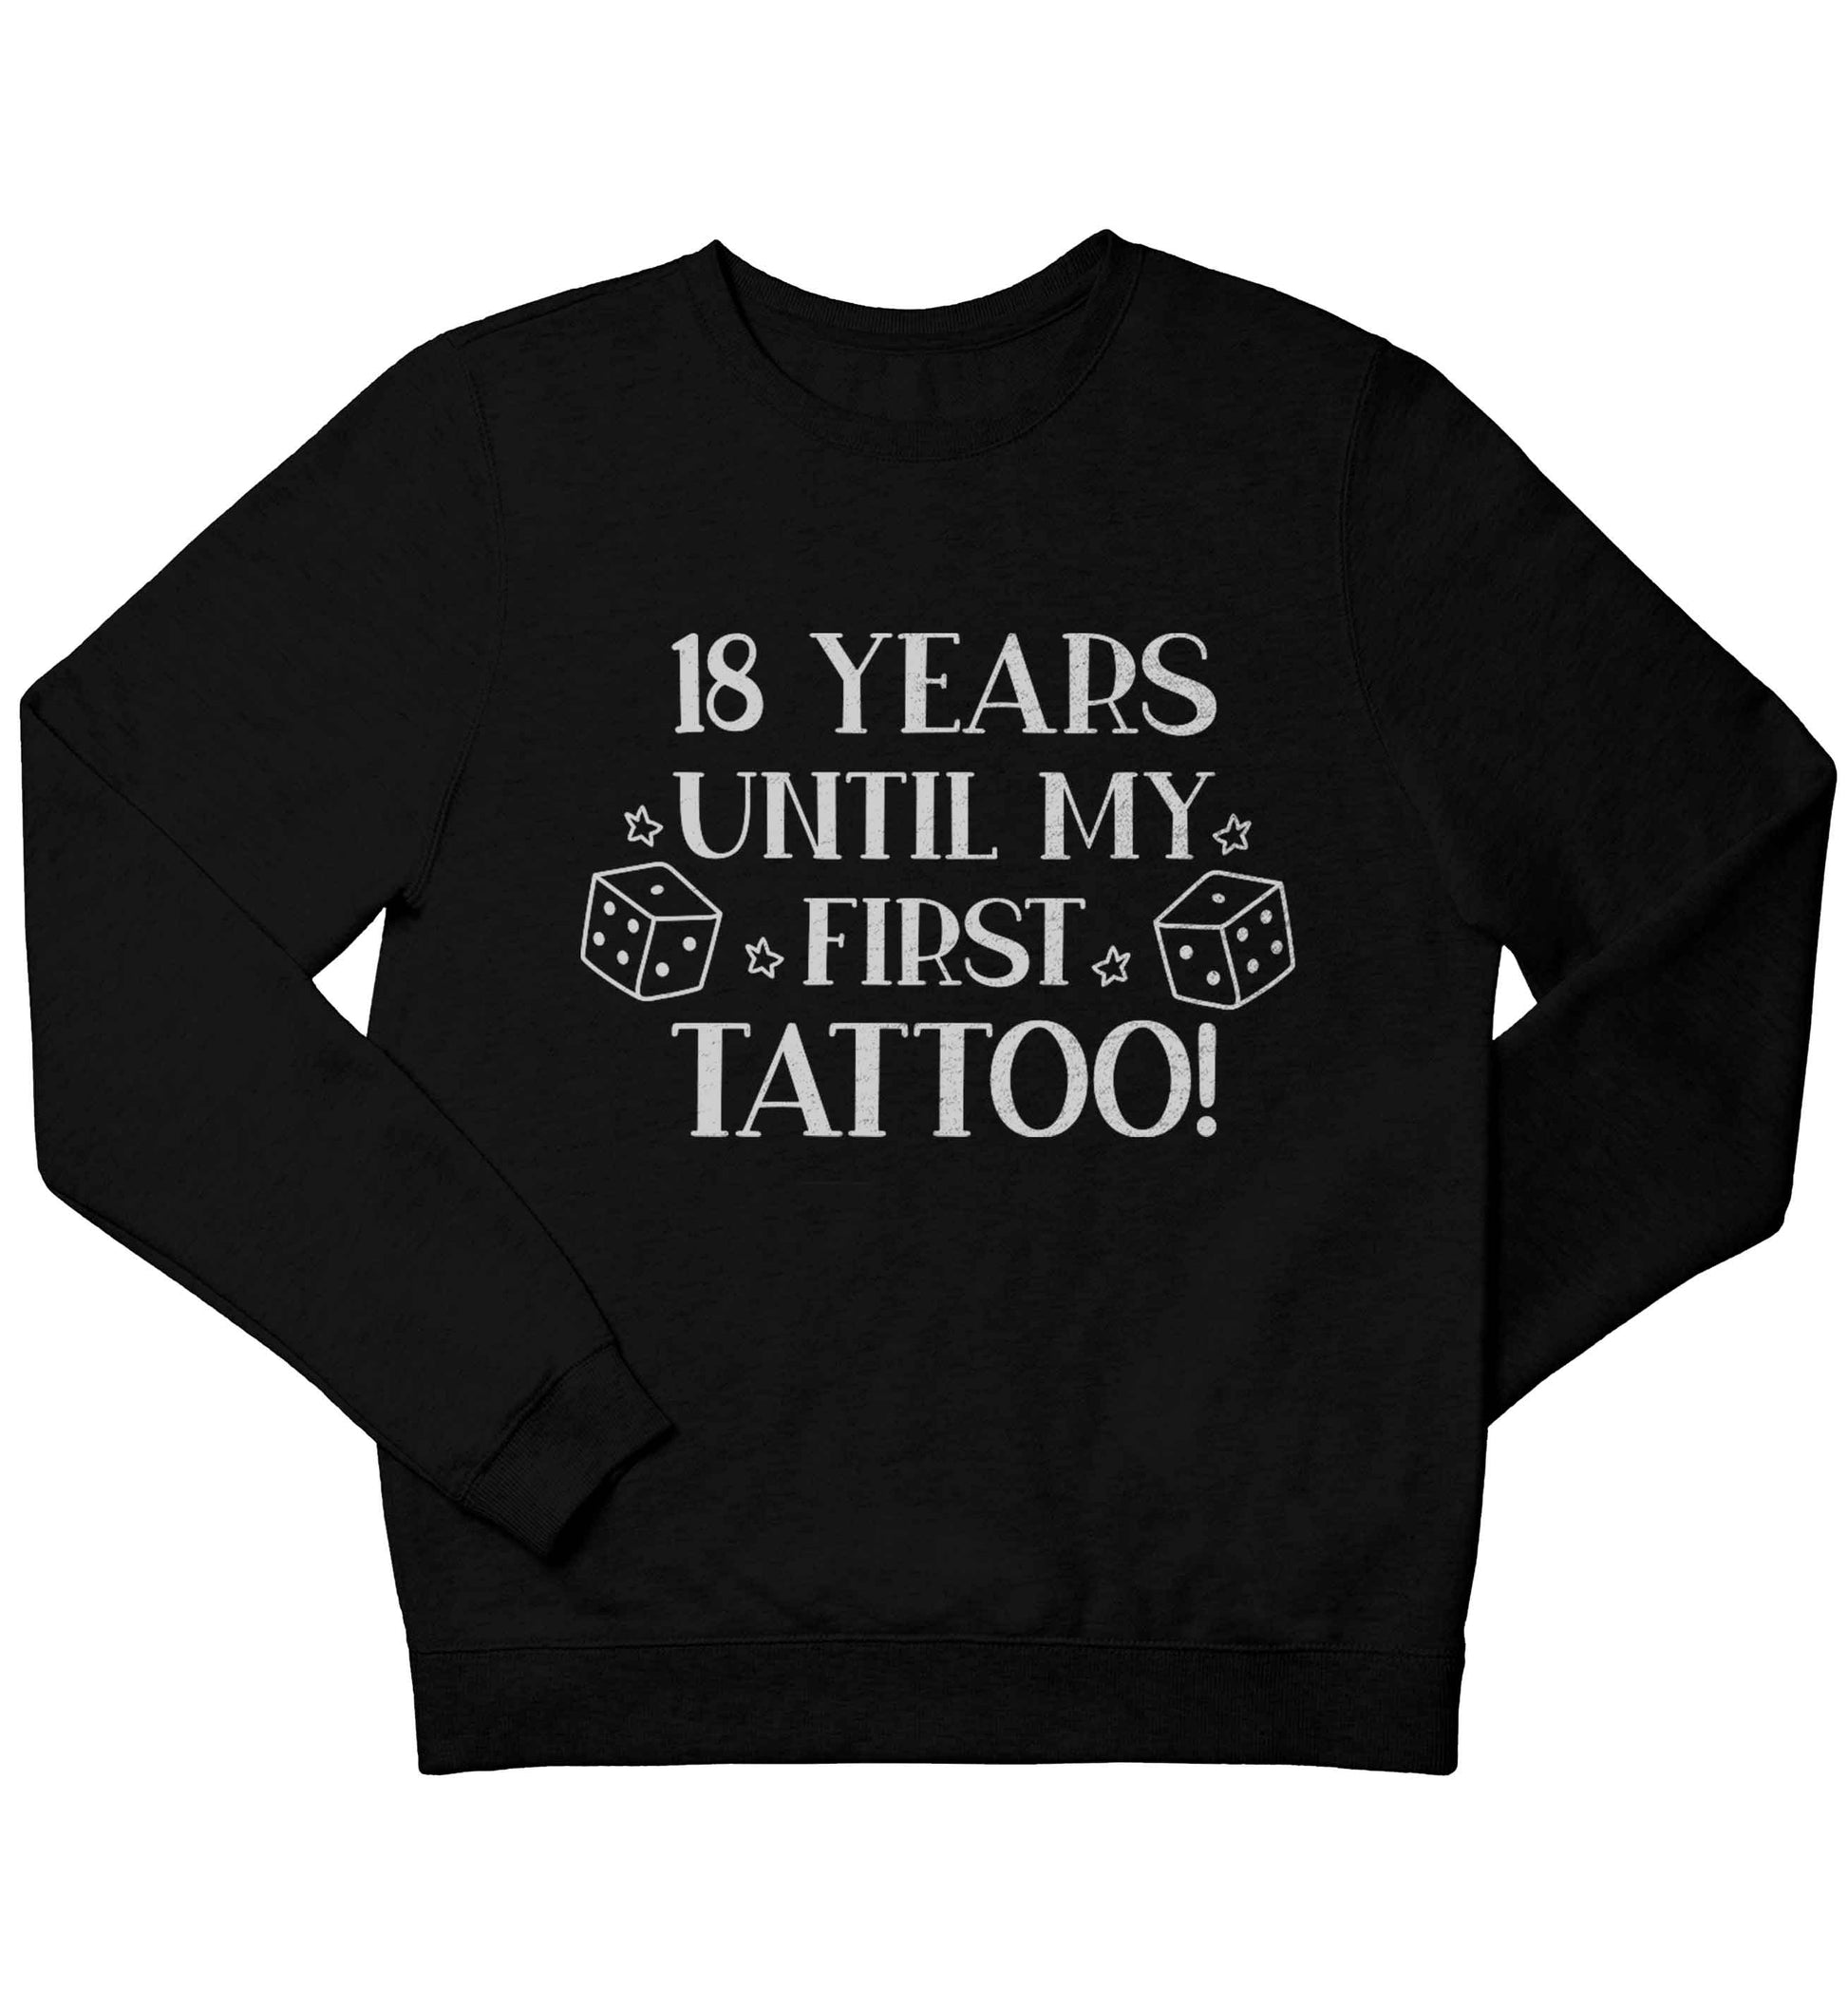 18 Years Until my First Tattoo children's black sweater 12-13 Years